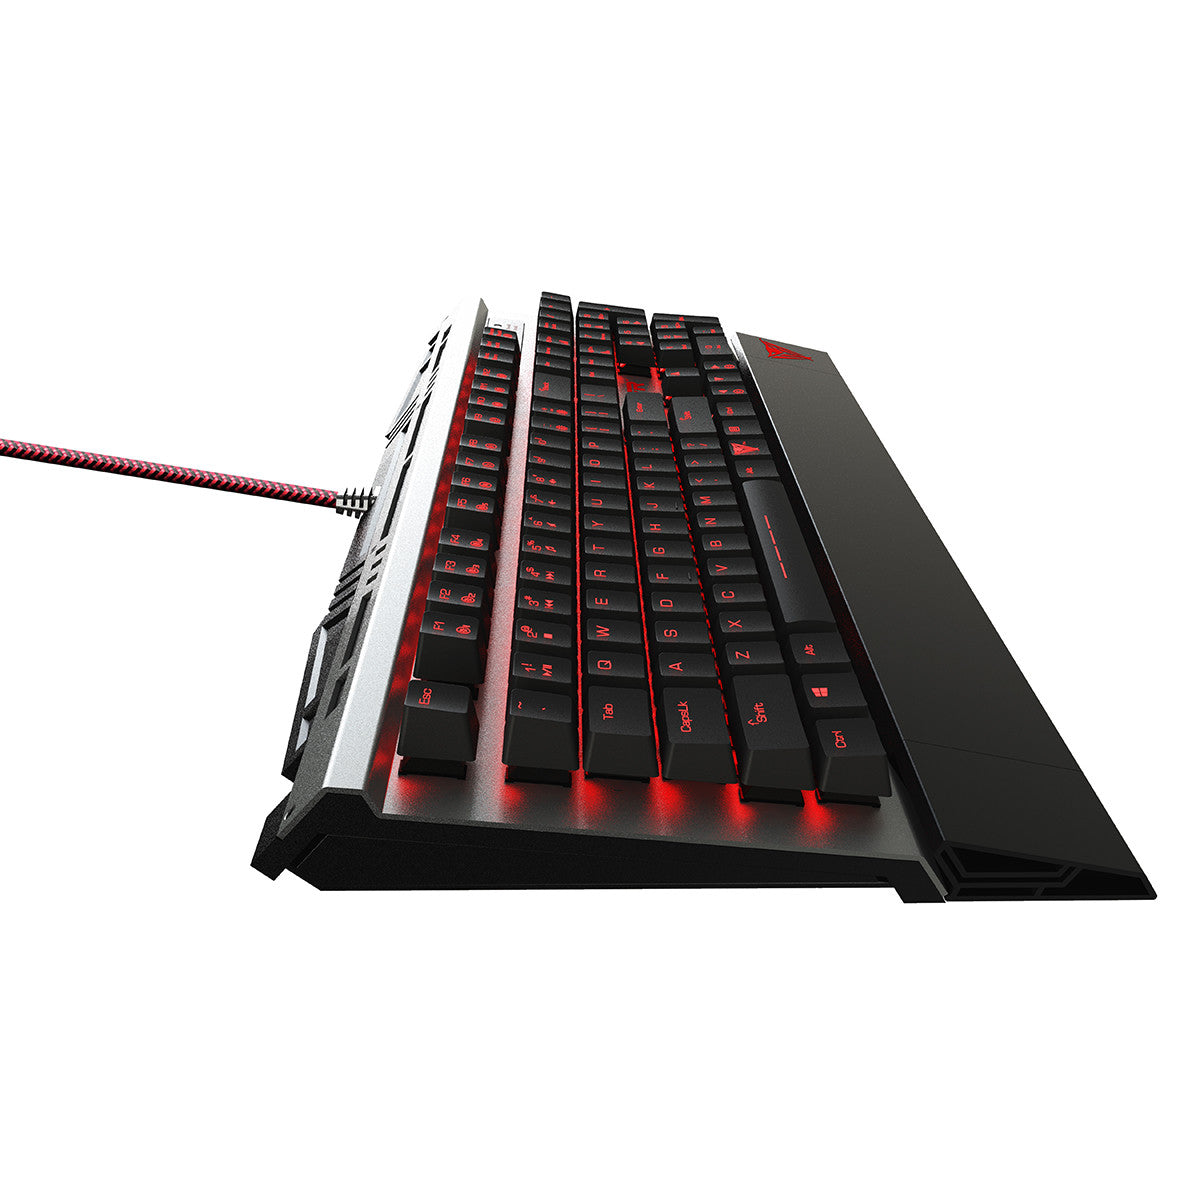 Patriot Viper V730 LED Mechanical Gaming Keyboard